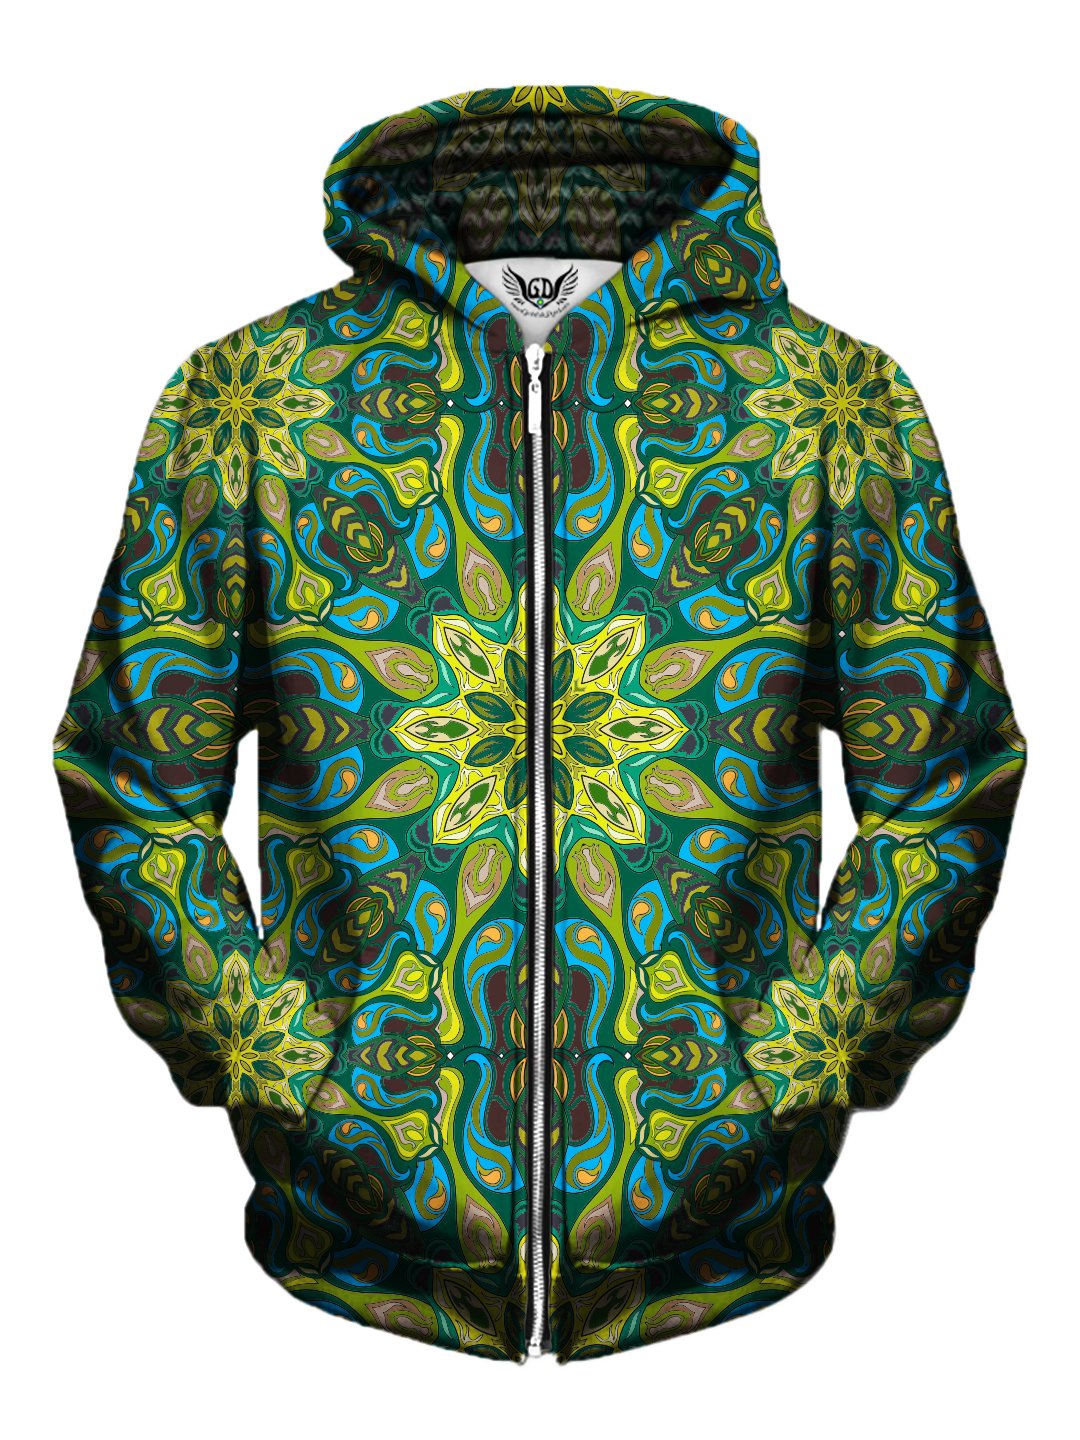 Men's green & blue psychedelic mandala zip-up hoodie front view.